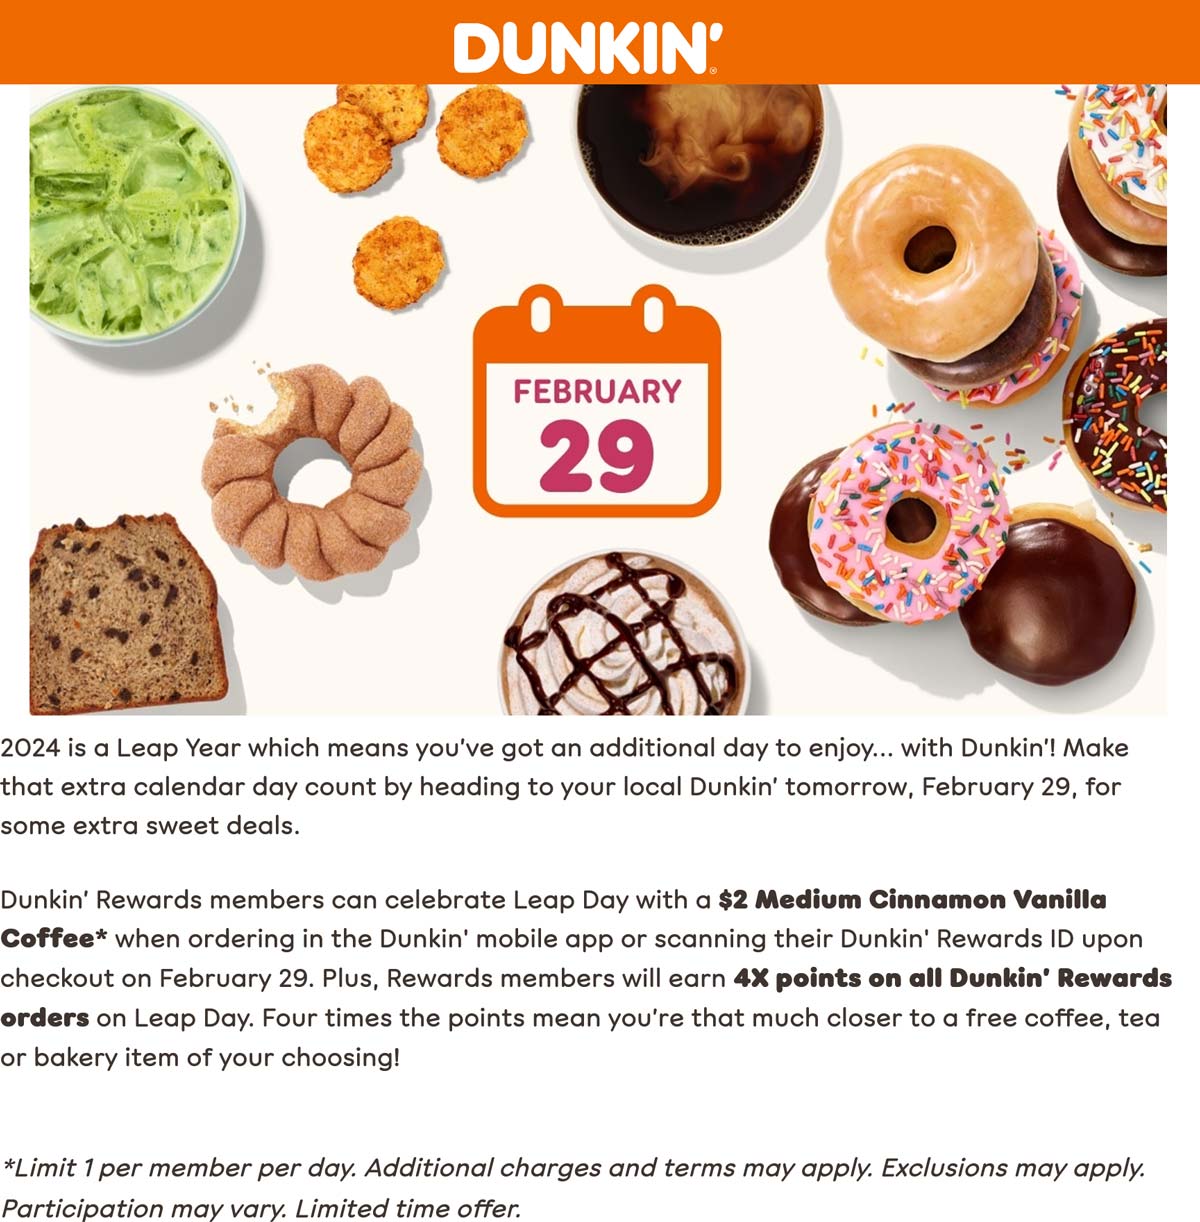 Dunkin restaurants Coupon  $2 medium cinnamon vanilla coffee via mobile today at Dunkin Donuts #dunkin 